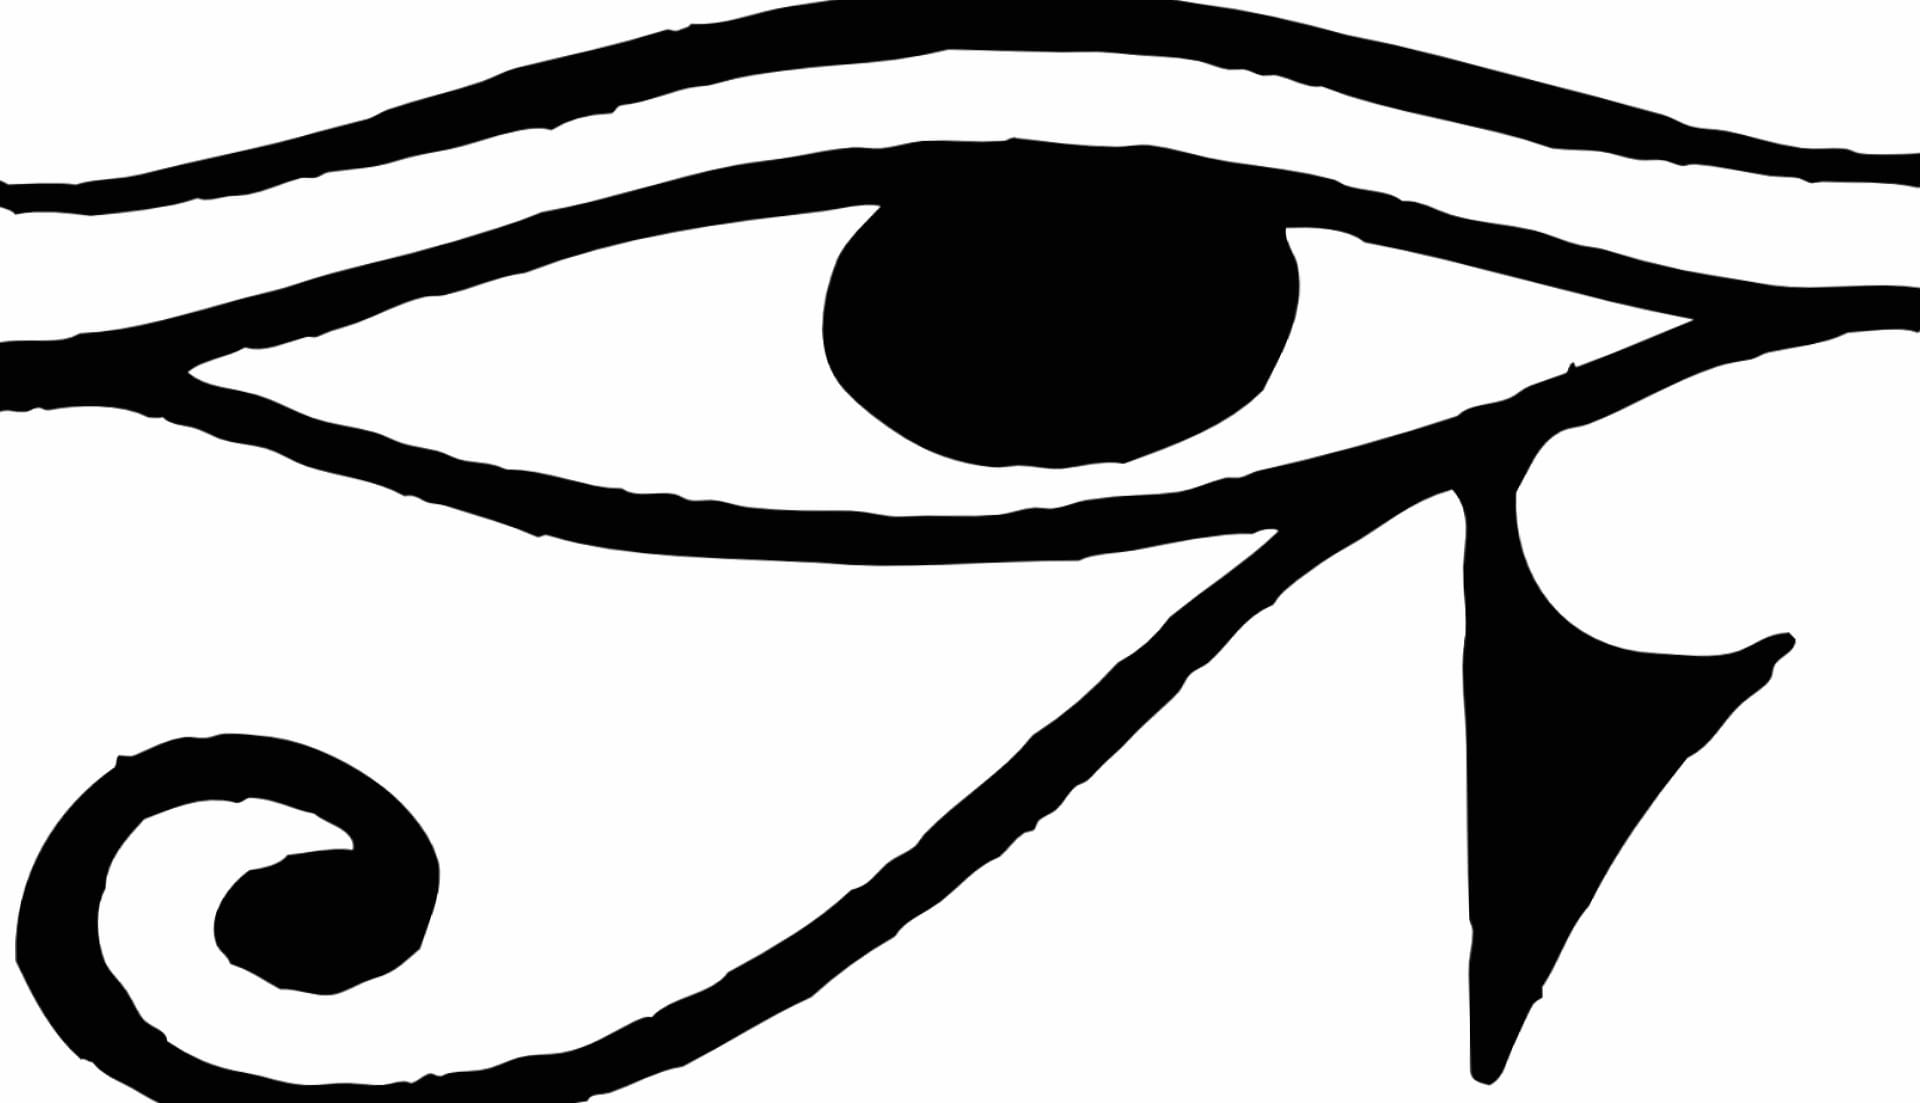 Eye of Horus wallpapers HD quality